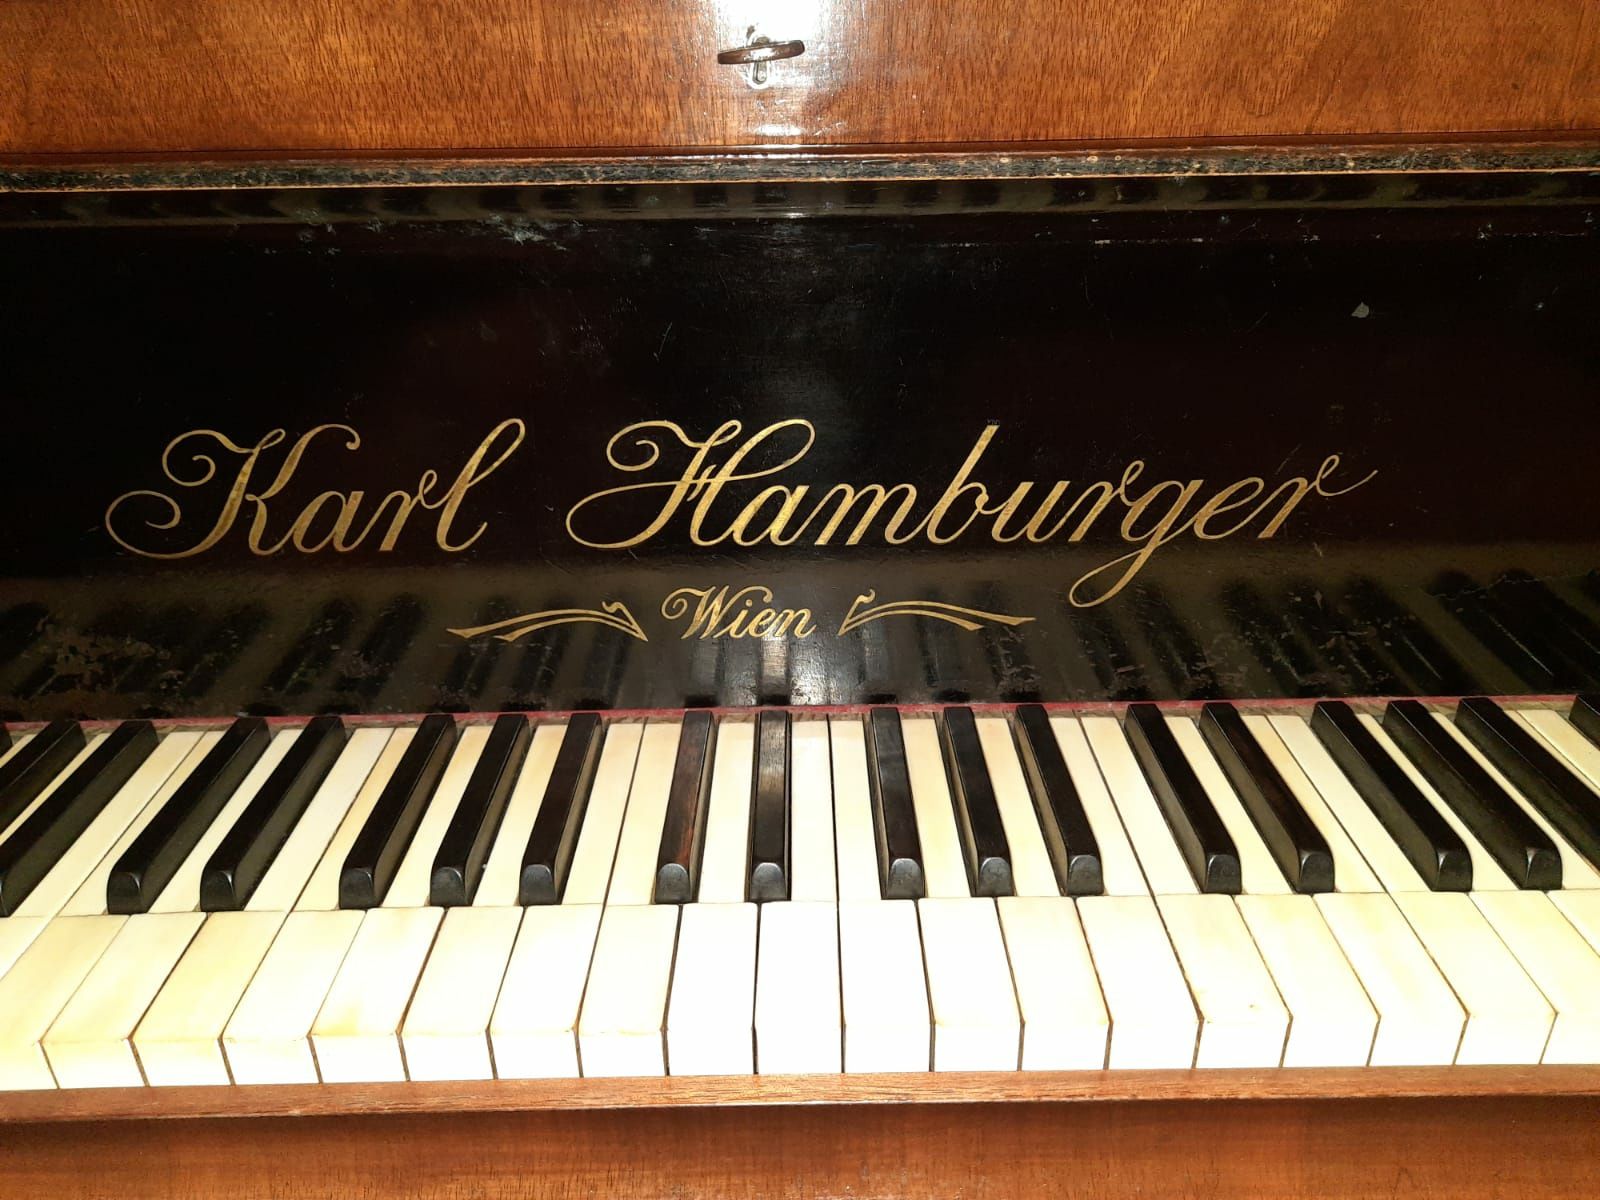 Pian clasic vienez Karl Hamburger